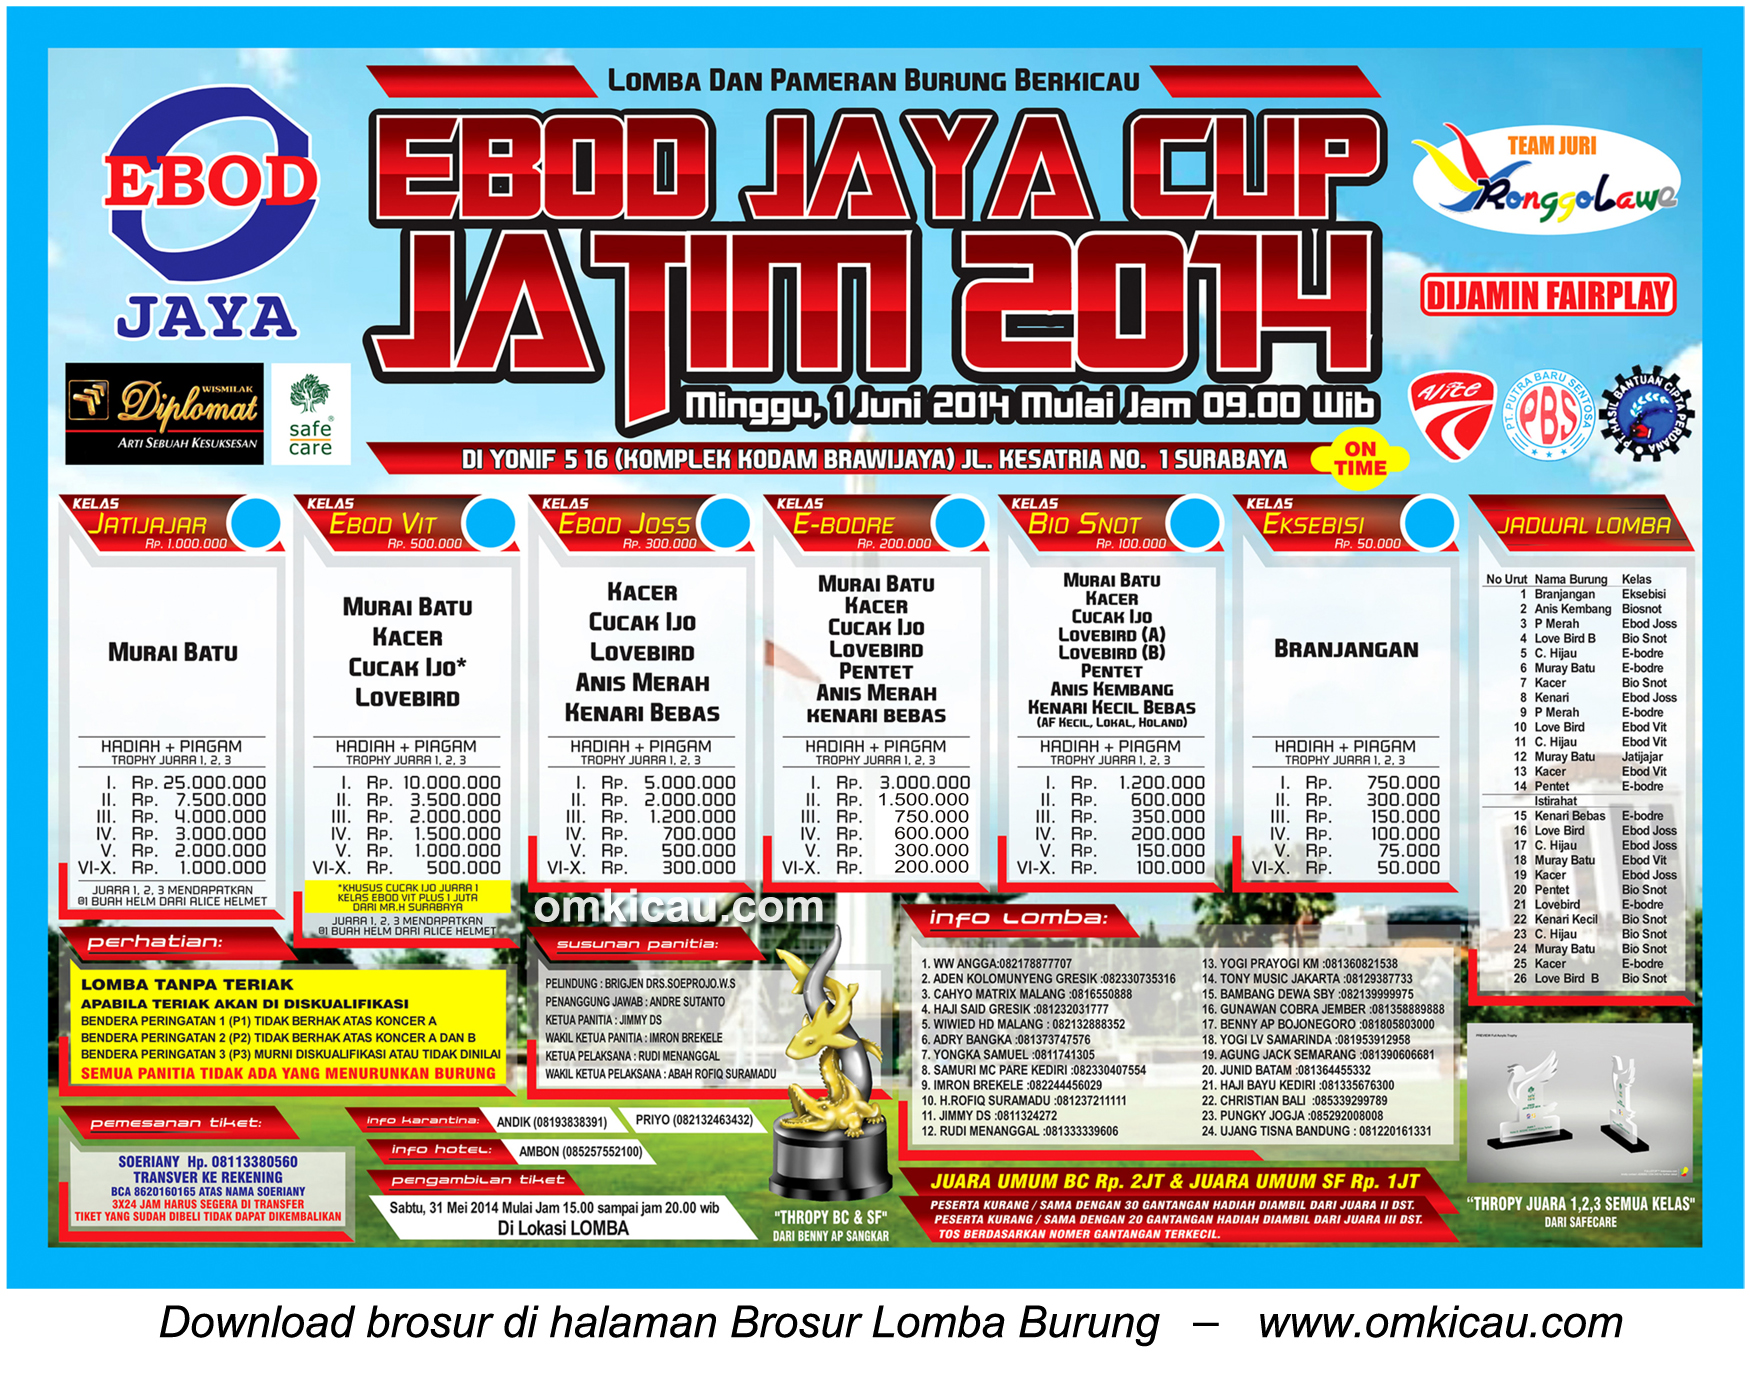 Brosur Lomba Burung Berkicau Ebod Jaya Cup Jatim 2014, Surabaya, 1 Juni 2014